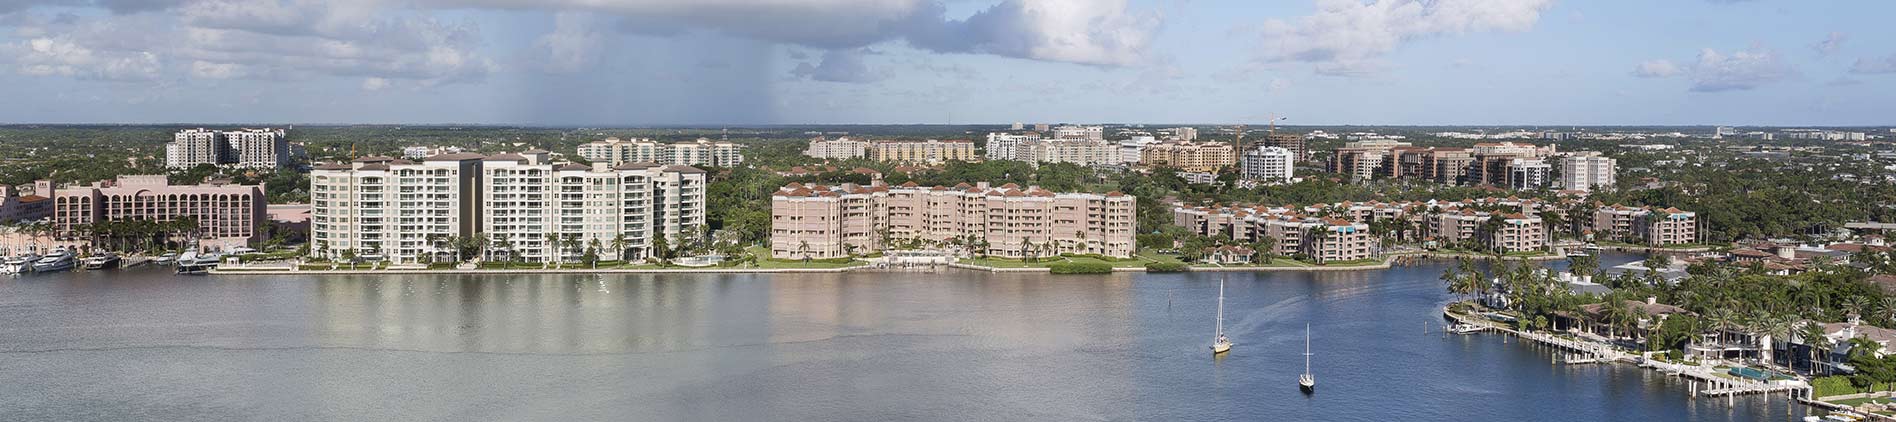 Real Estate Law - Palm Beach Florida